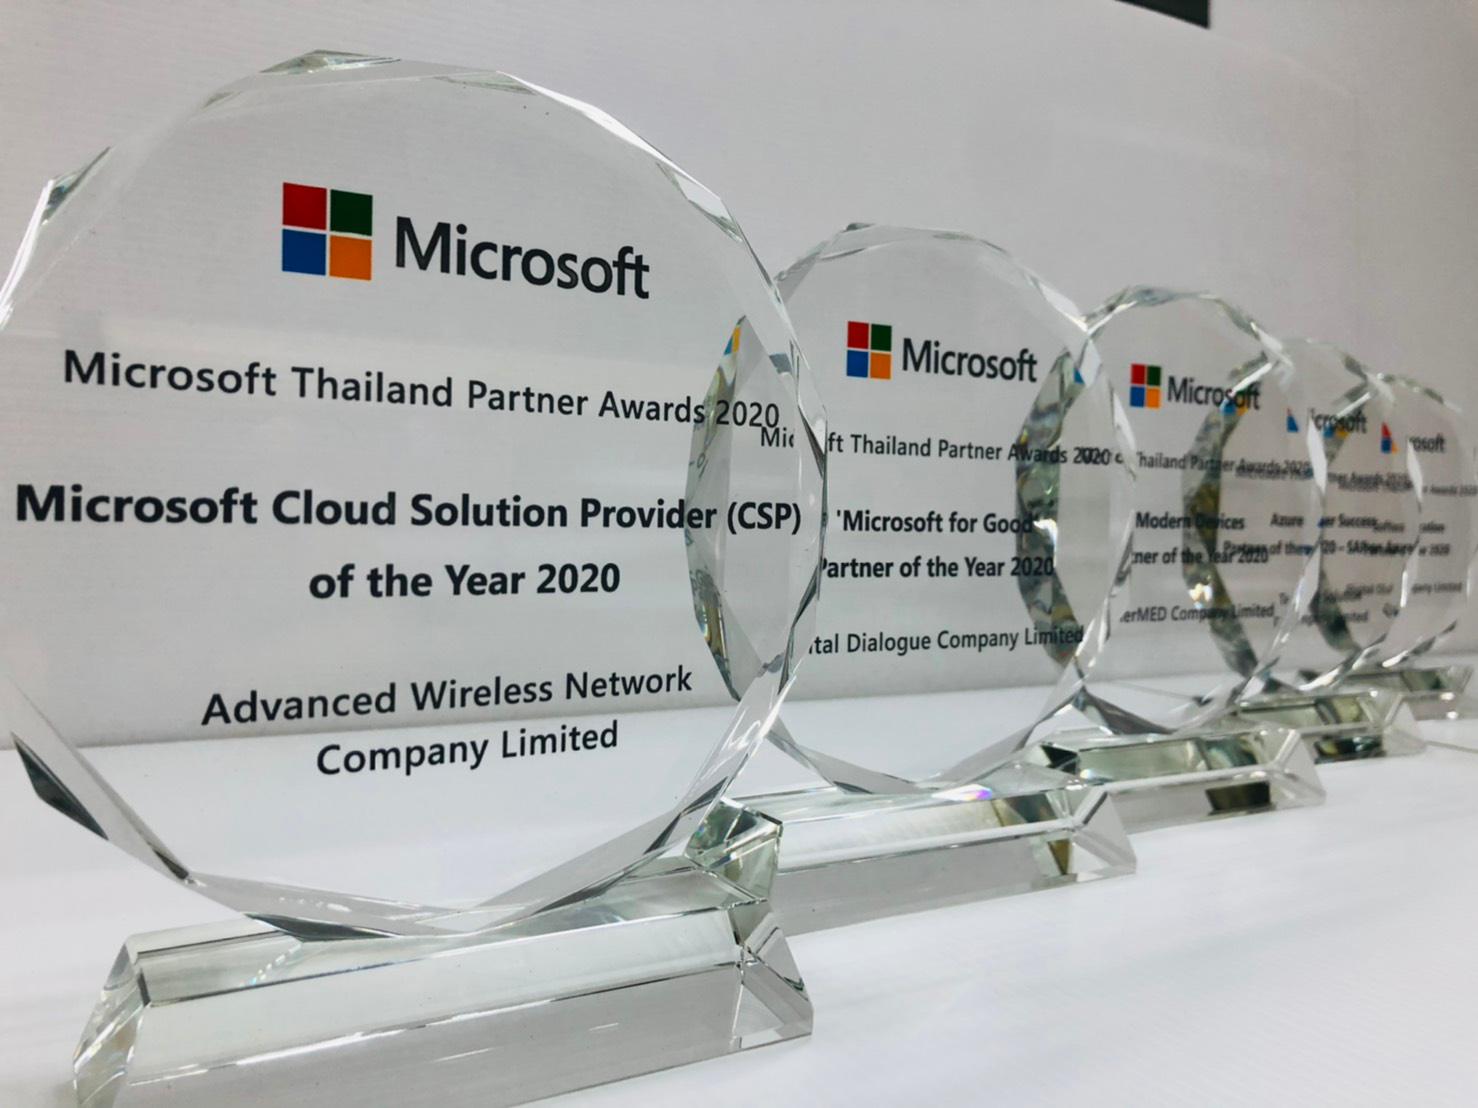 Row of Microsoft Thailand Partner Awards 2020 trophies